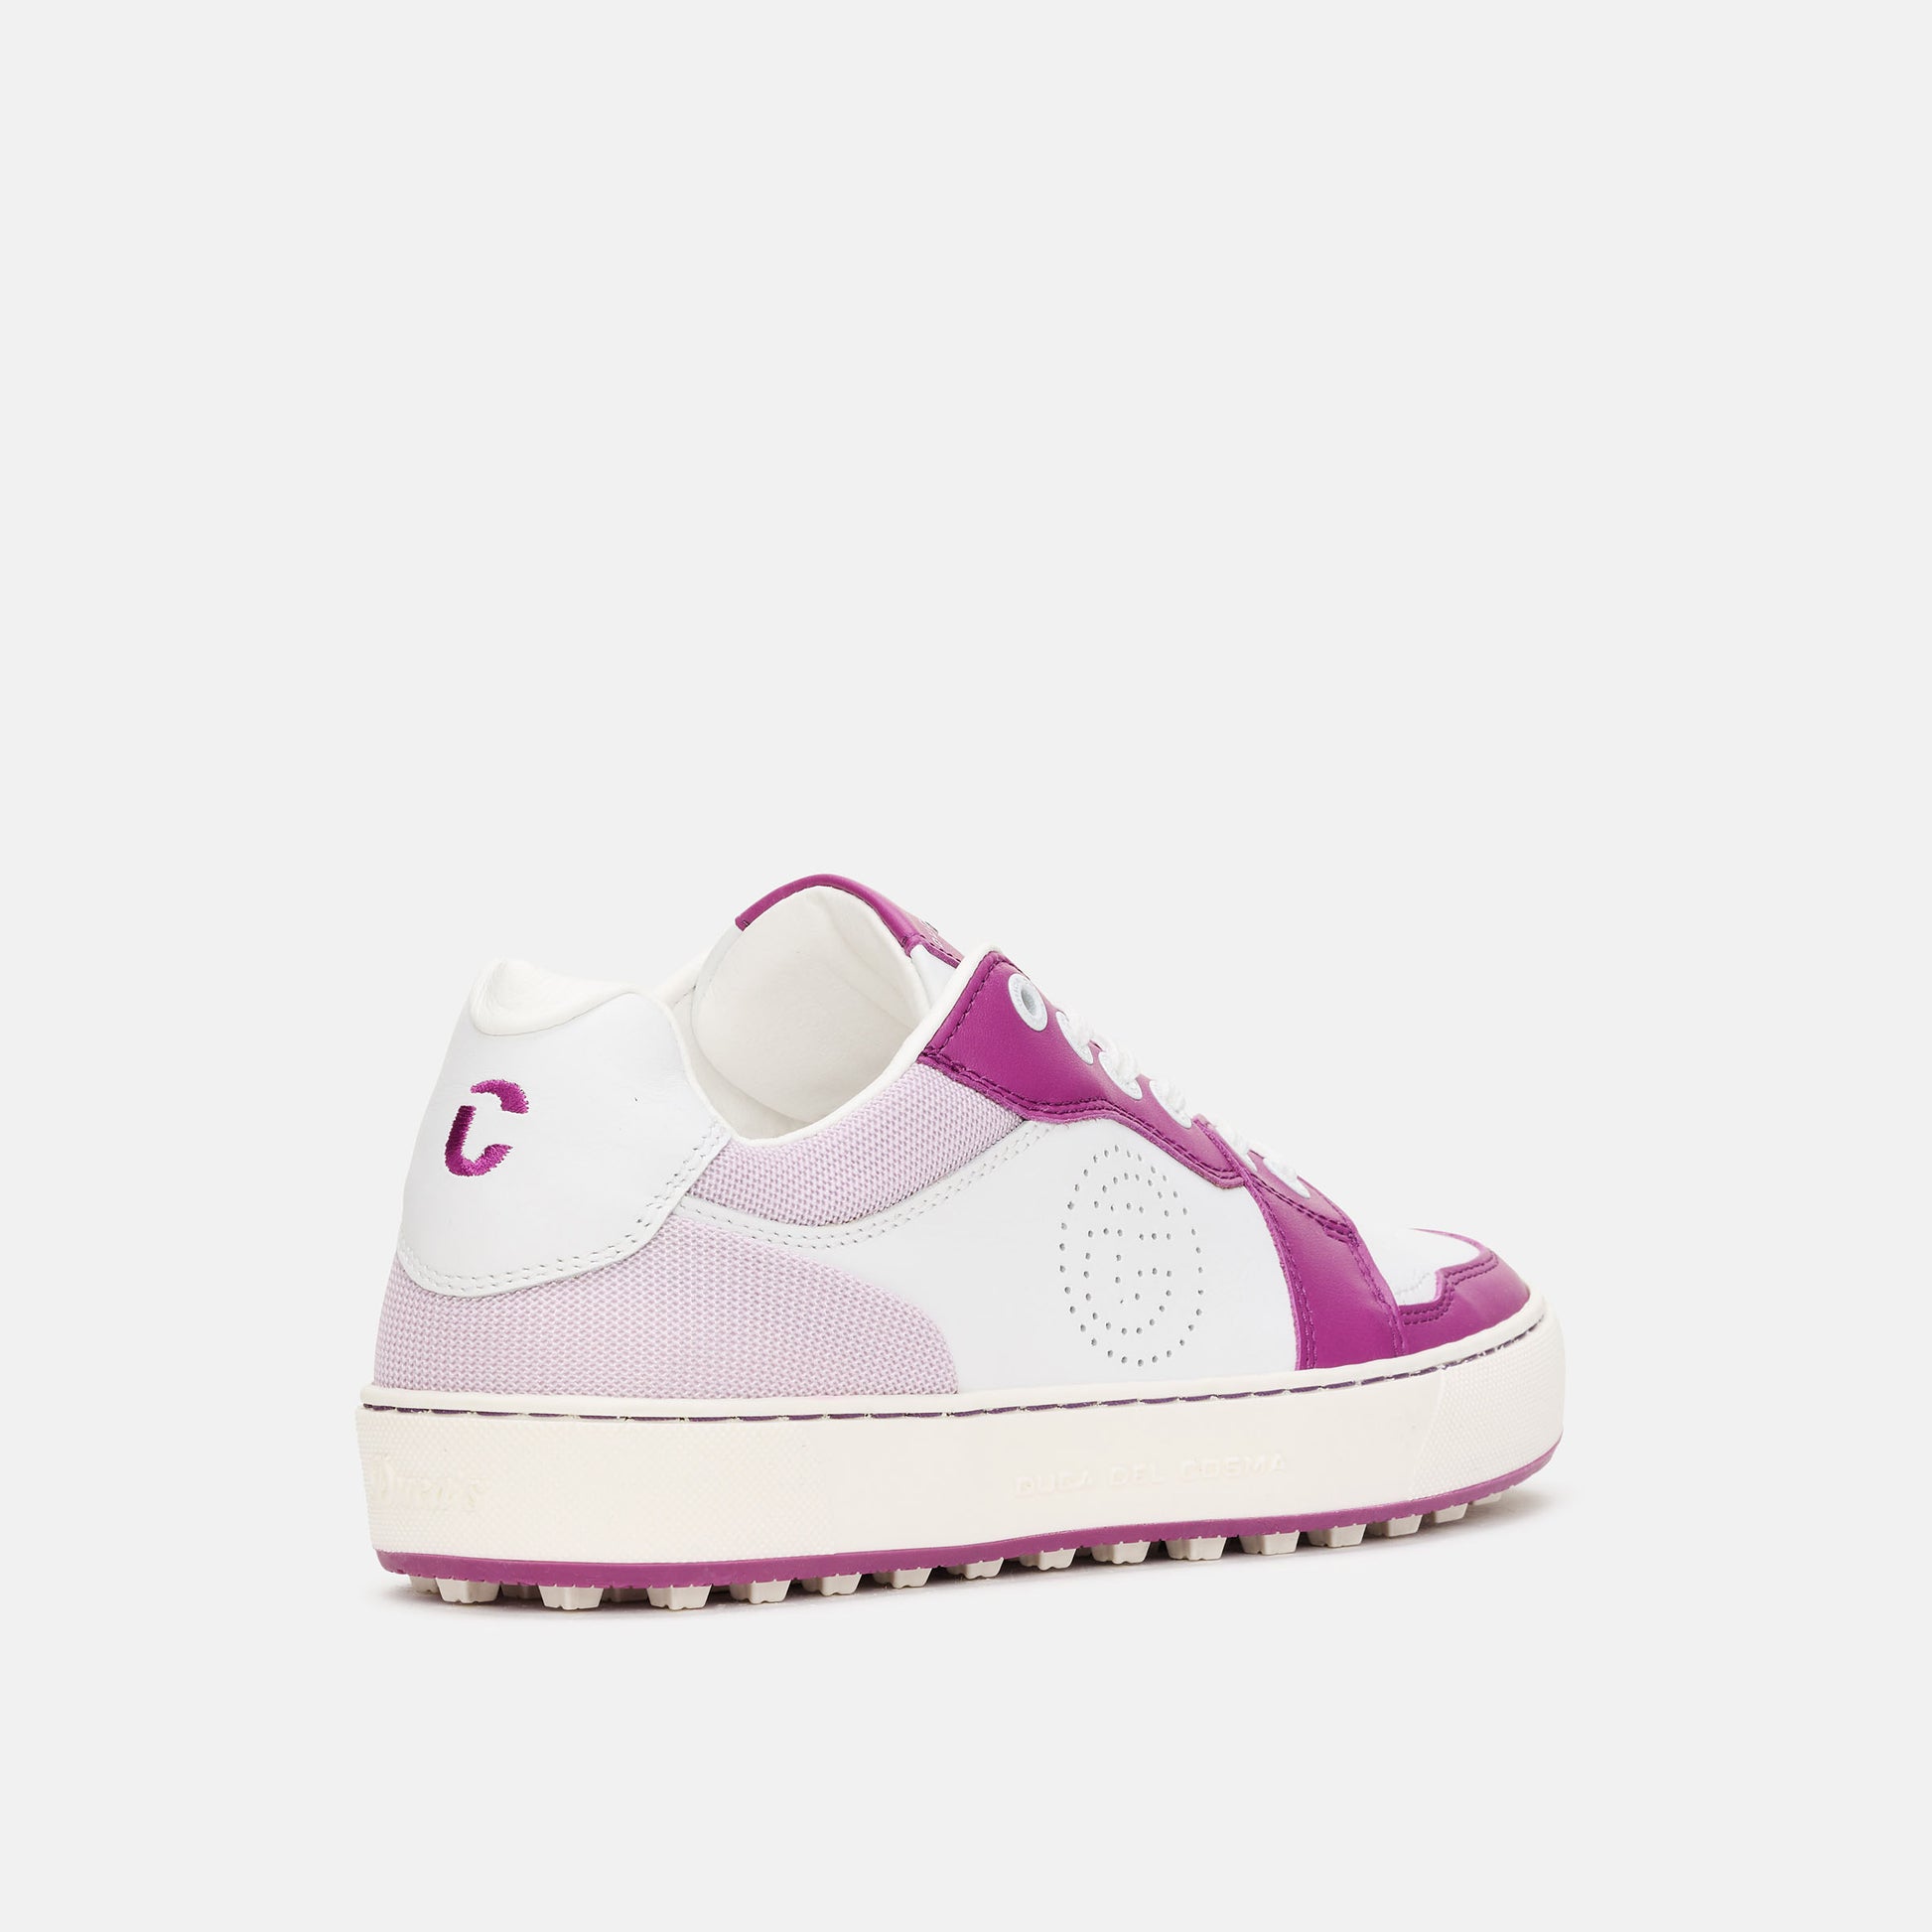 Purple Golf Shoes, Women's Pink Golf Shoes, Women's Golf Shoes Duca del Cosma, Spikeless Golf Shoes.